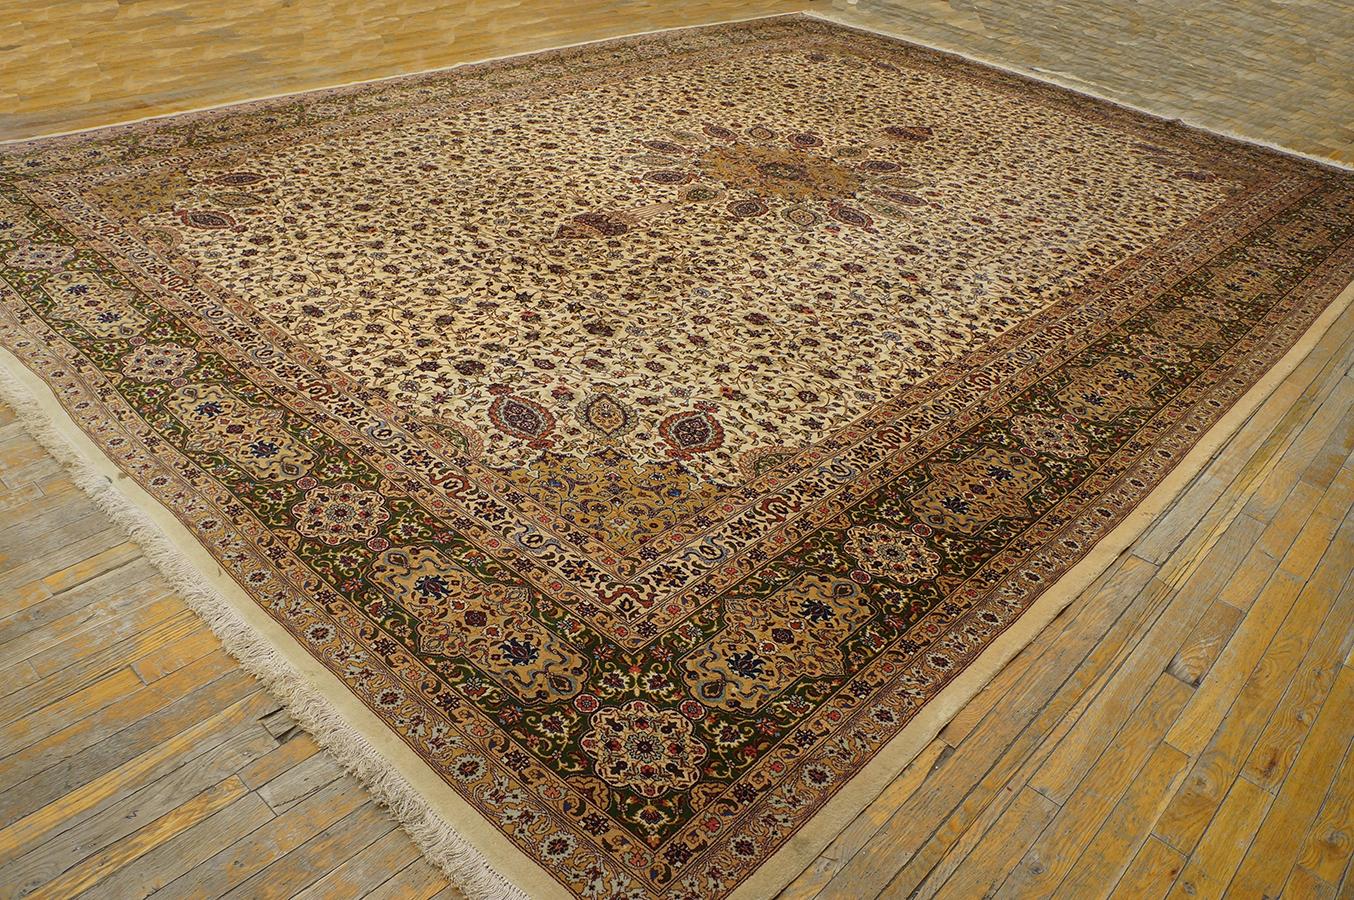 Antique Persian Tabriz Rug, Size: 11' 7''x 15' 7''